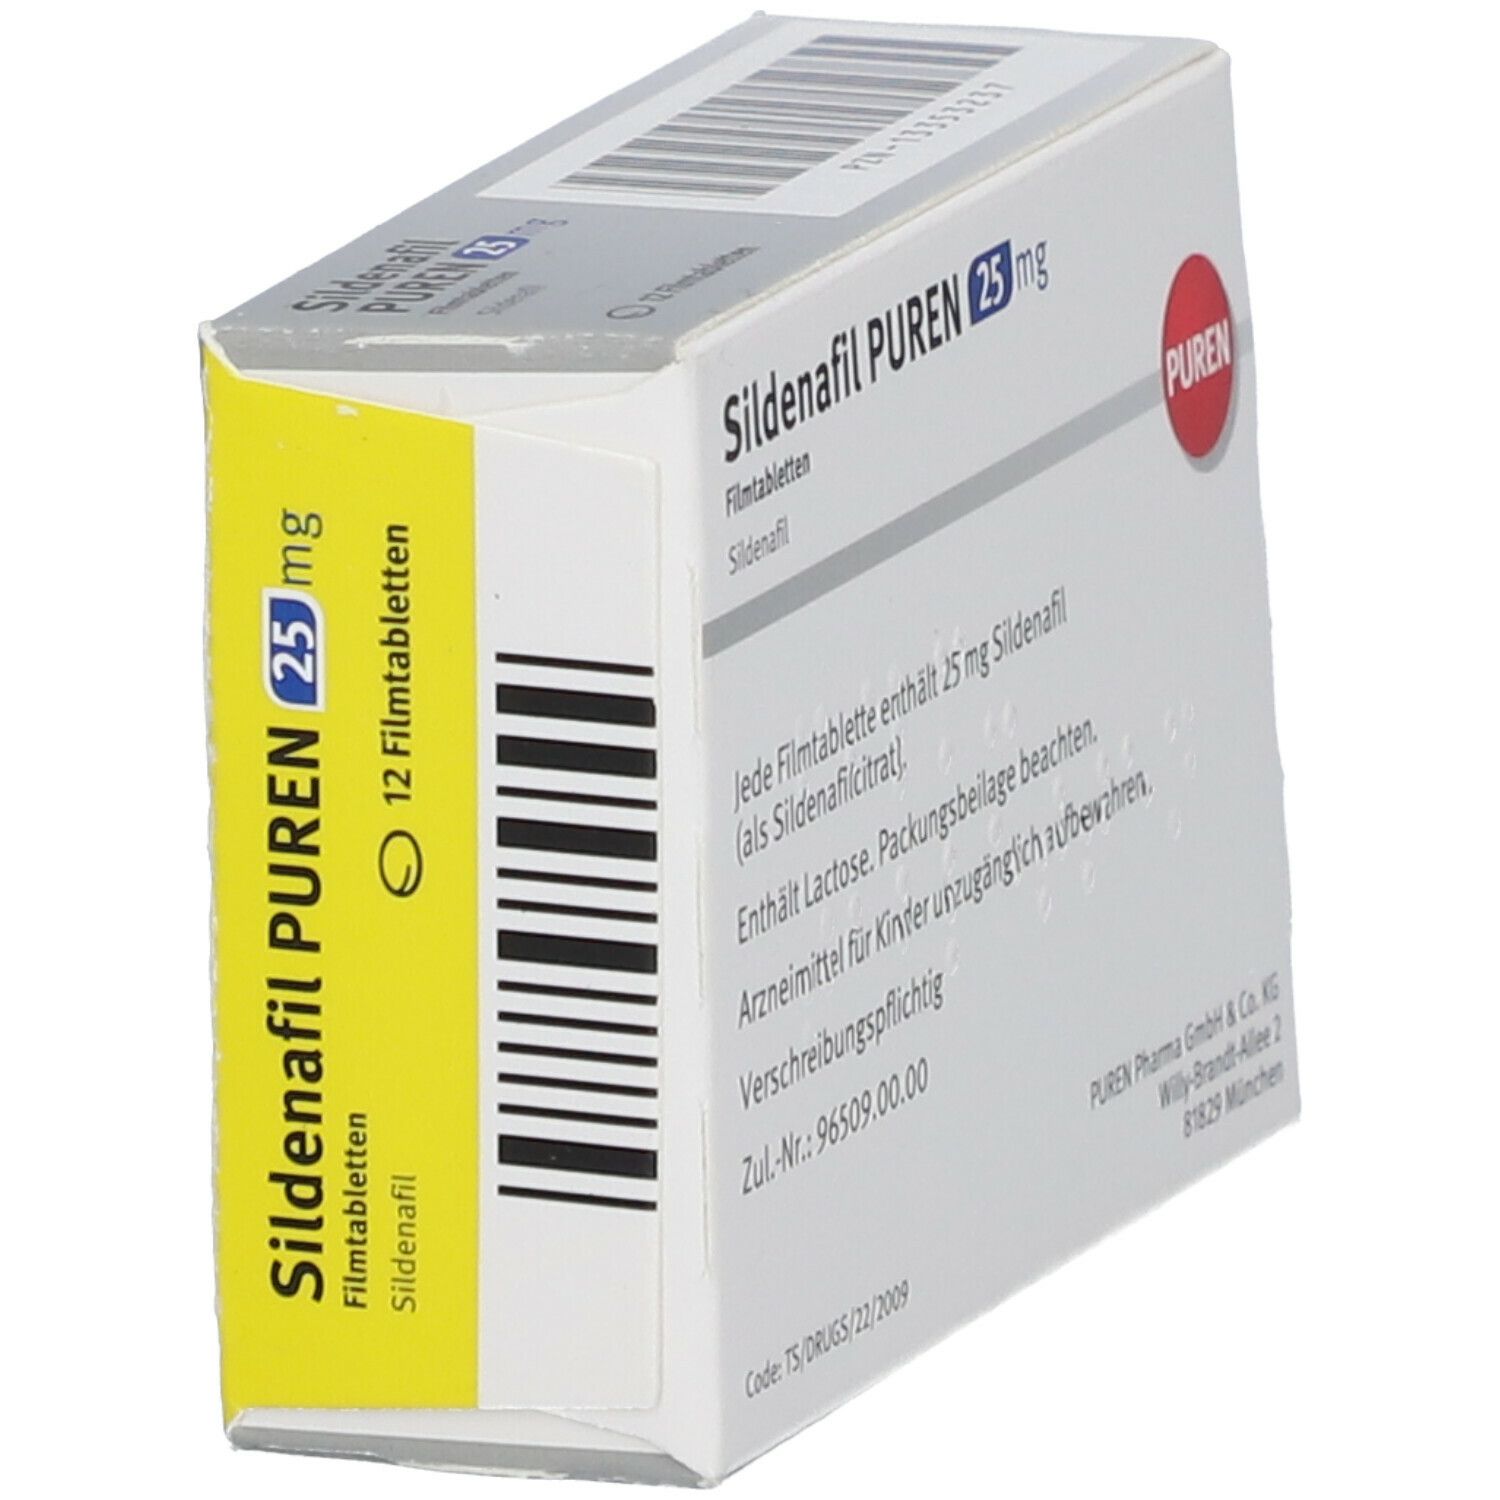 Sildenafil PUREN 25 mg